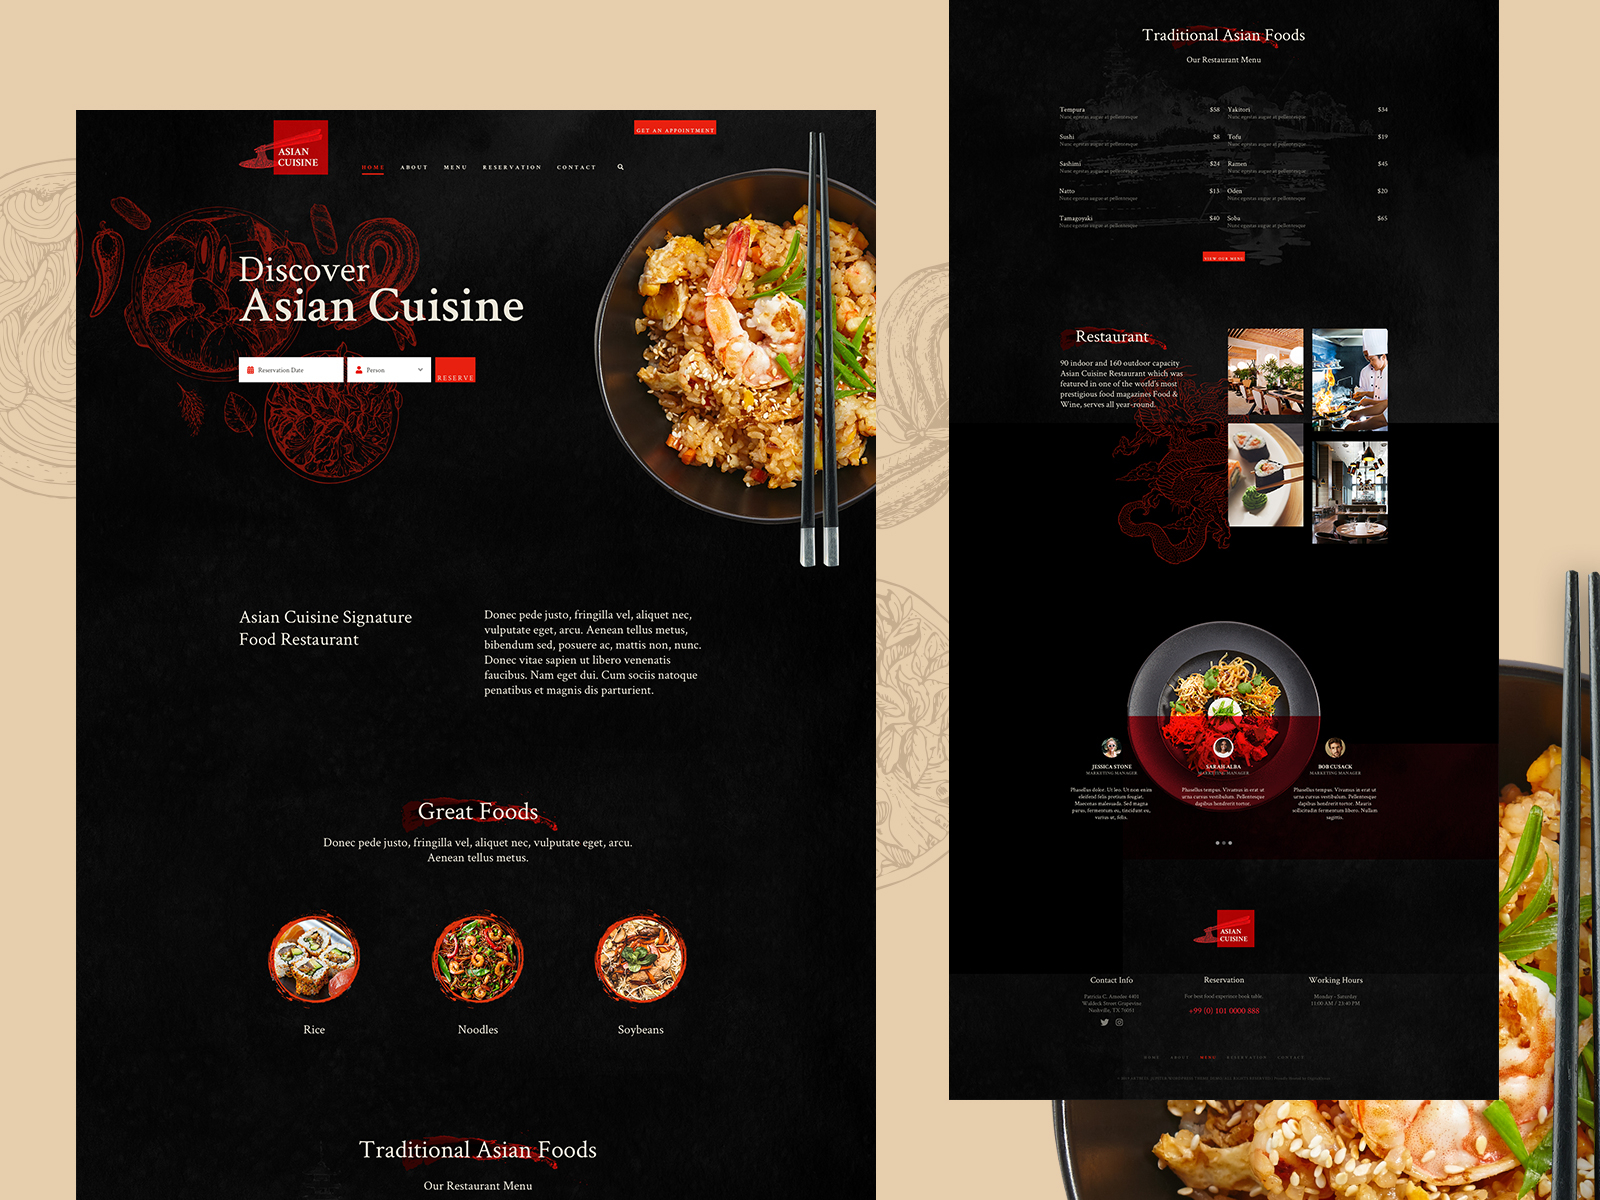 Asian Cuisine - Template Design by Cuneyt Erkol on Dribbble Throughout Asian Restaurant Menu Template